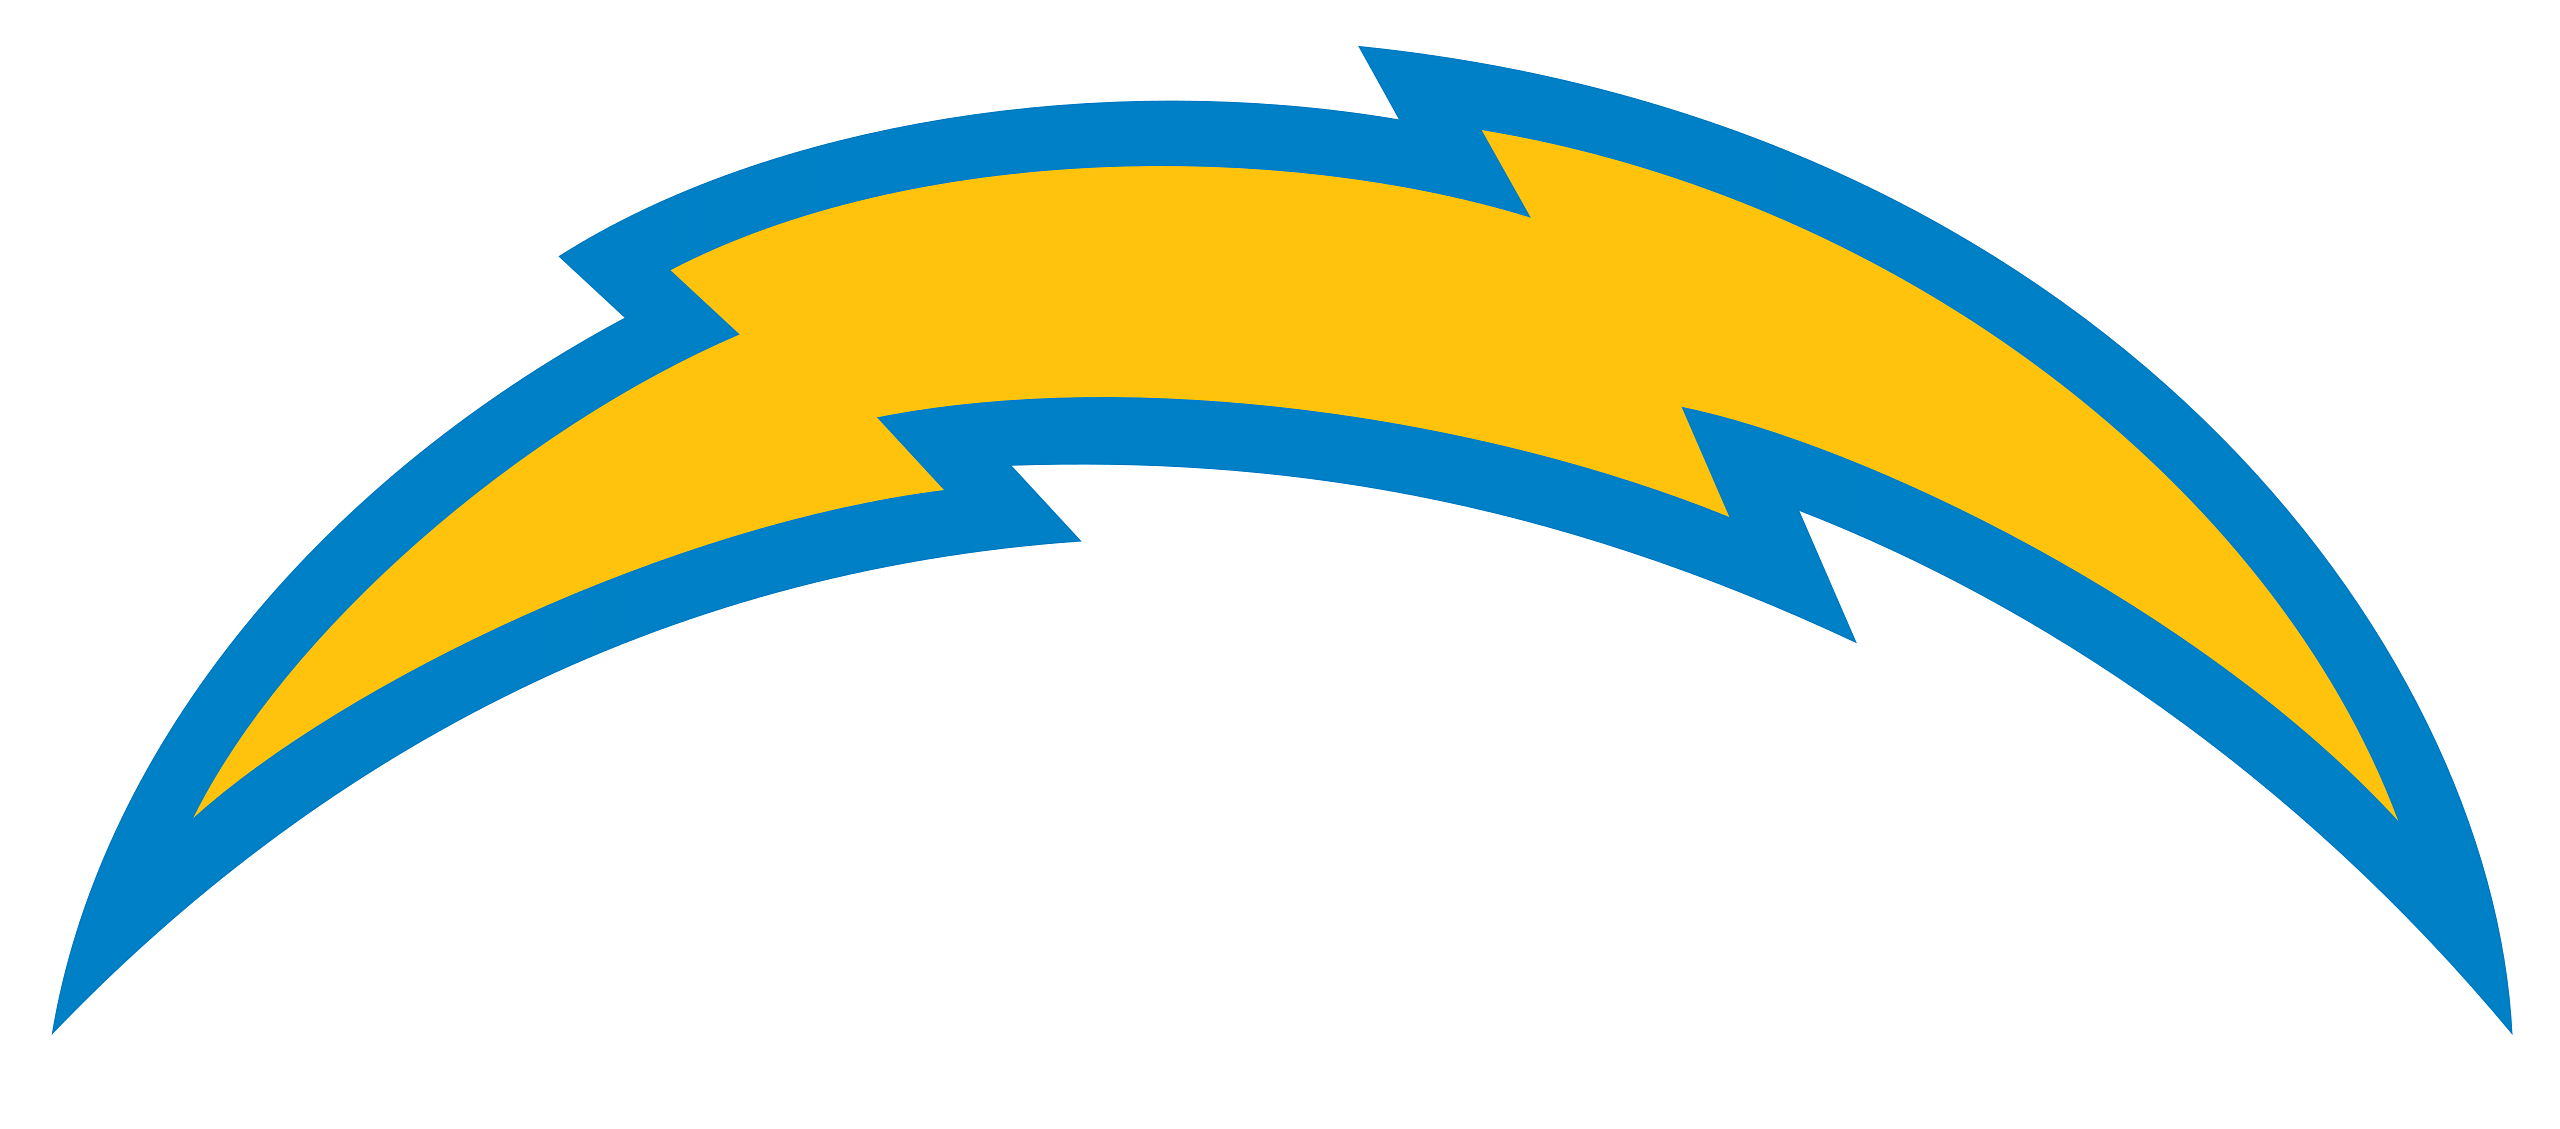 NFL-team-logo